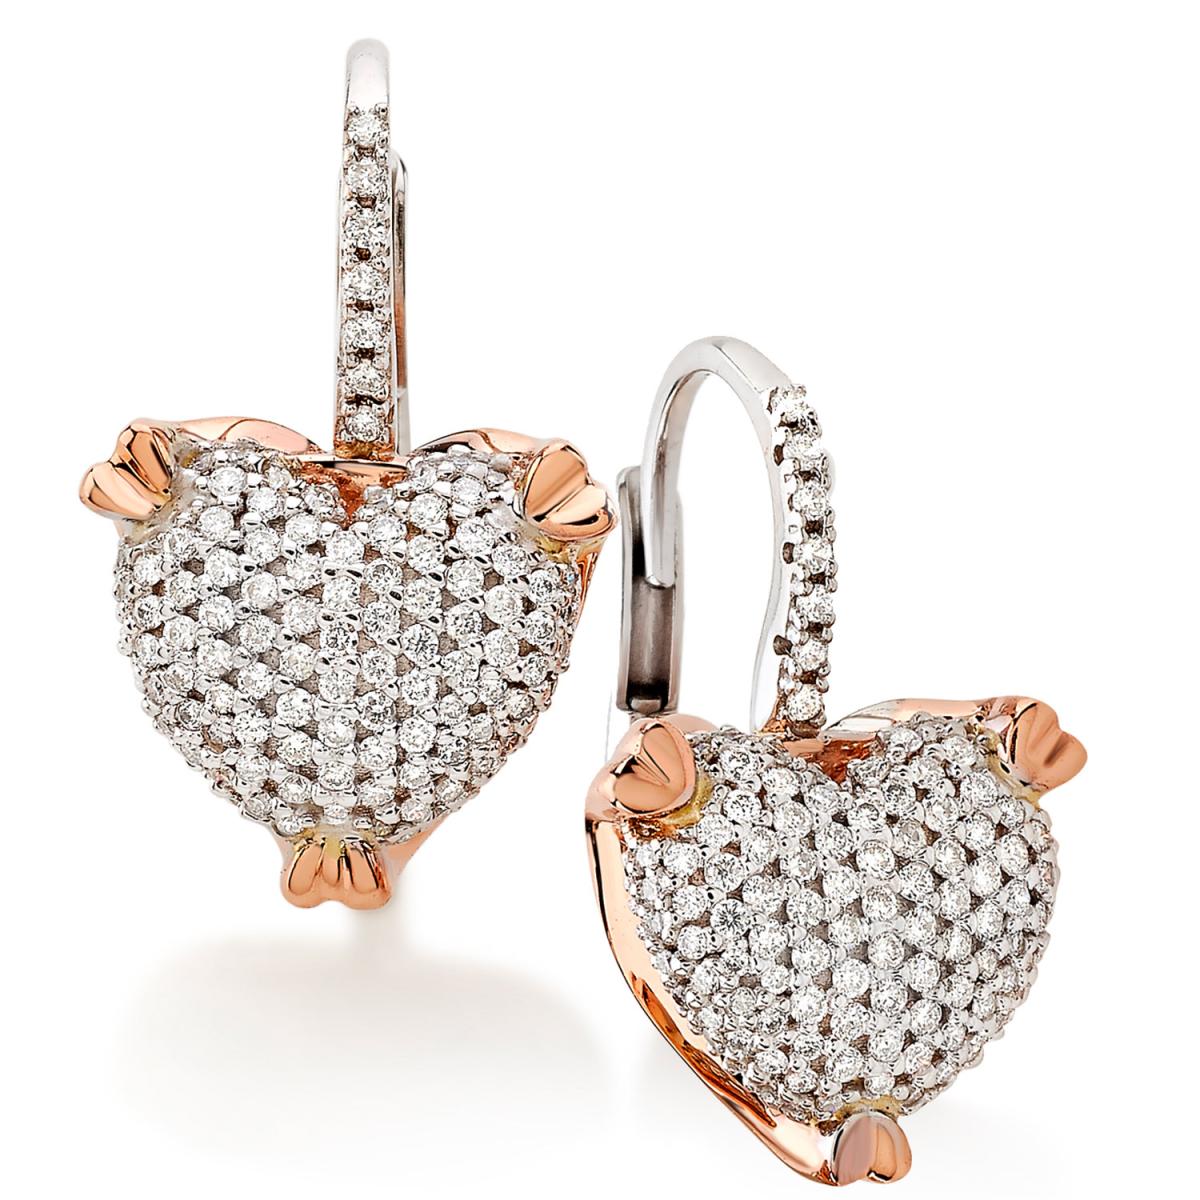 18kt gold heart hook earrings with pavé diamonds - OD332